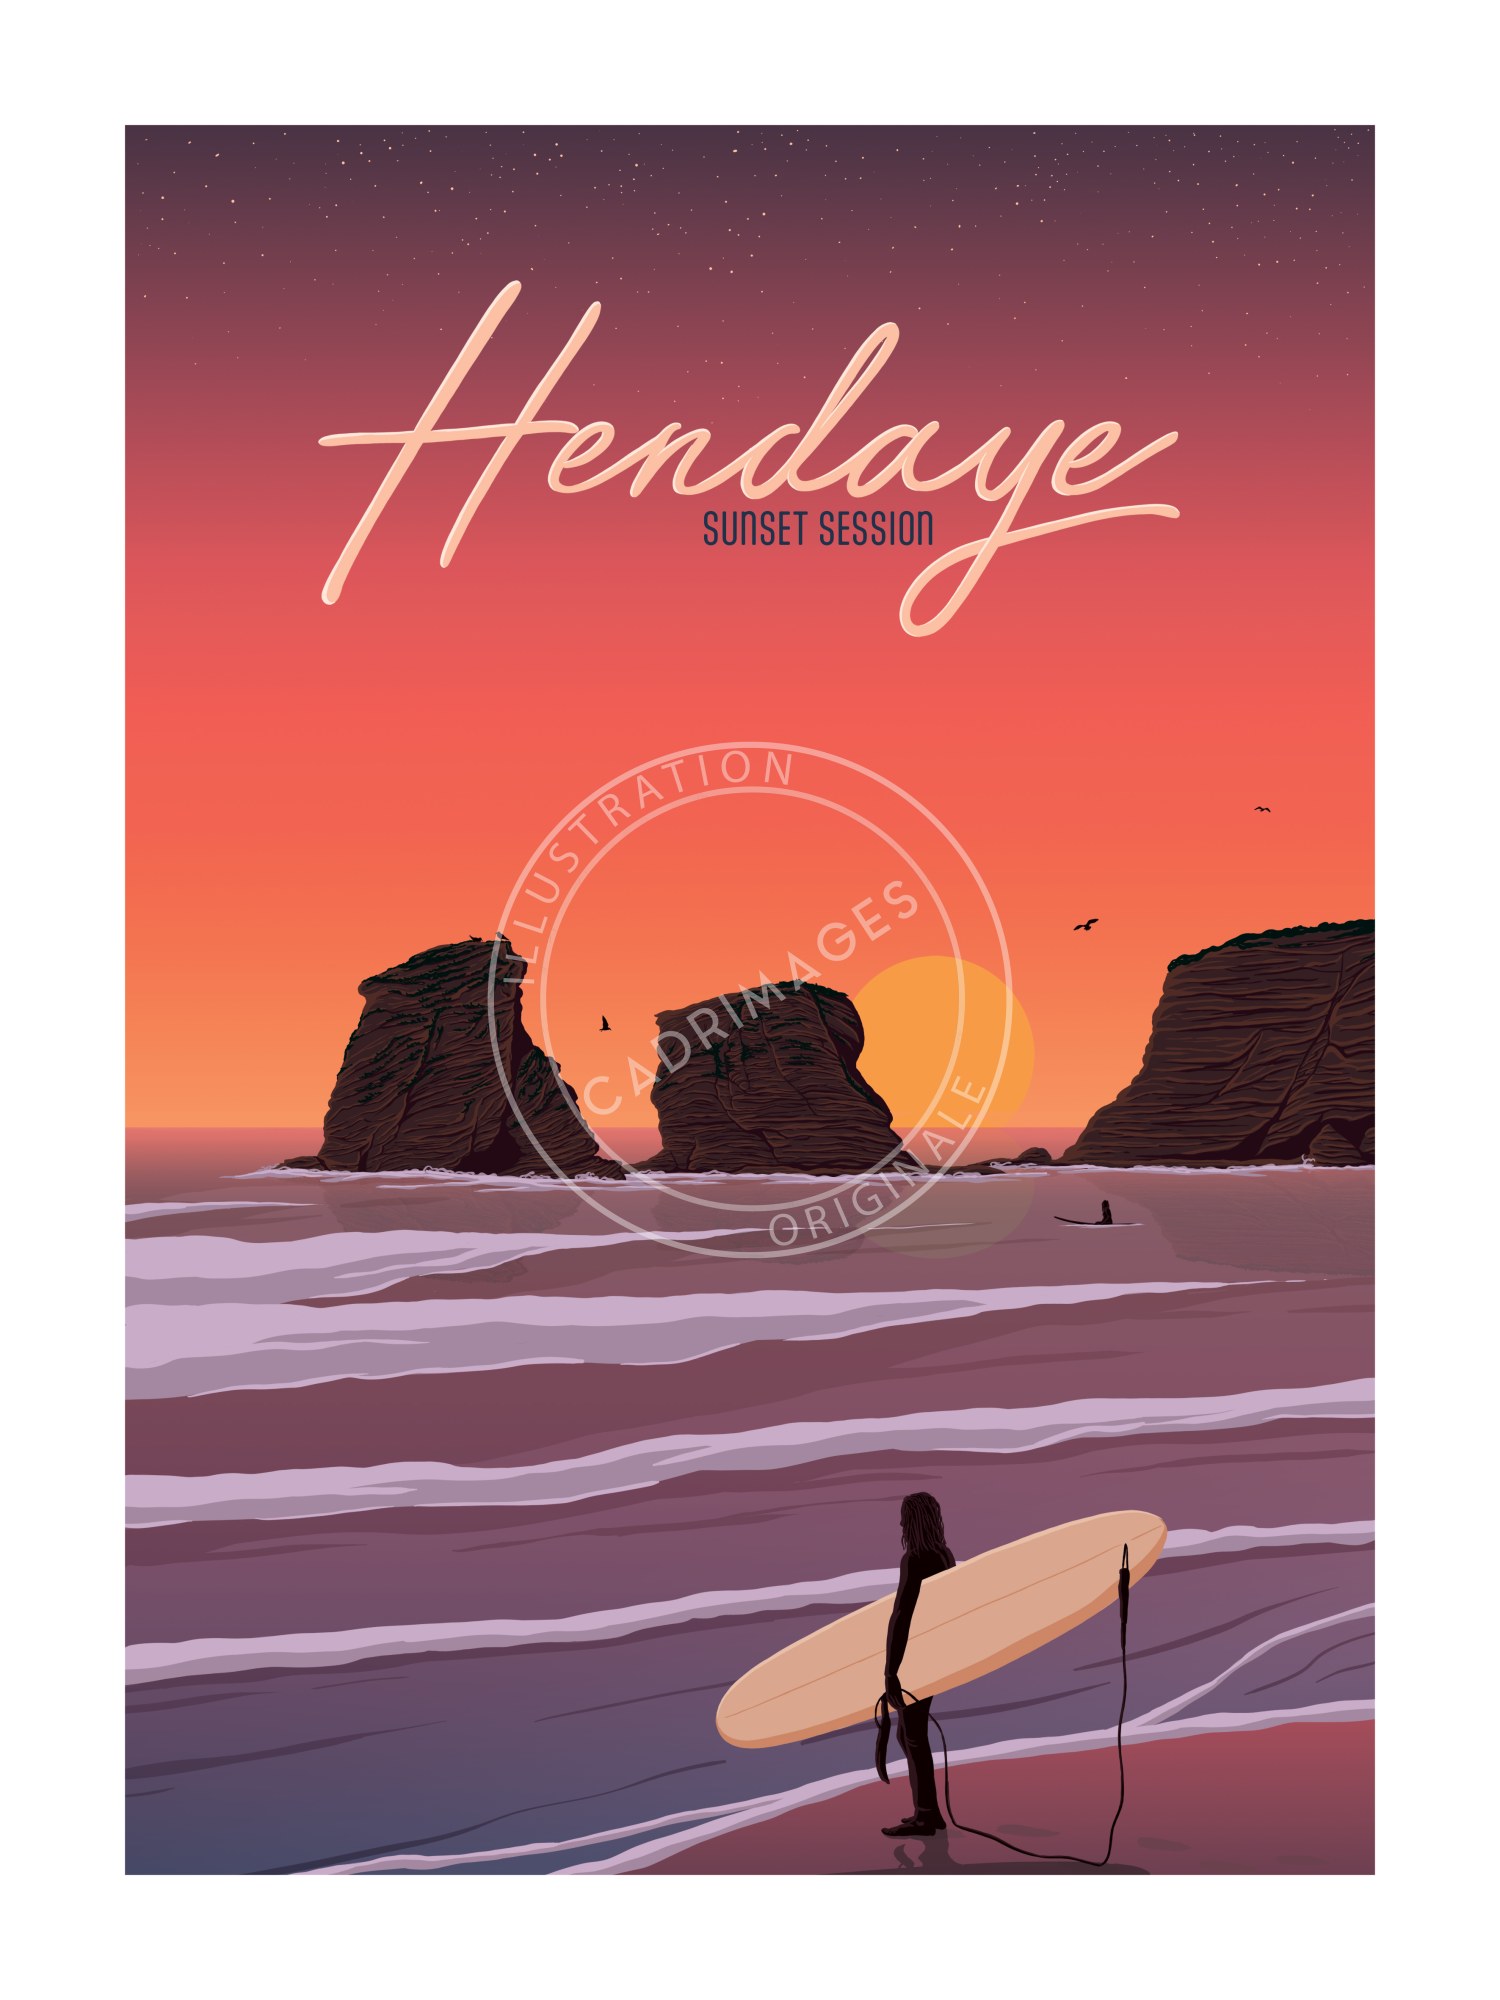 Affiche de Hendaye Sunset Session